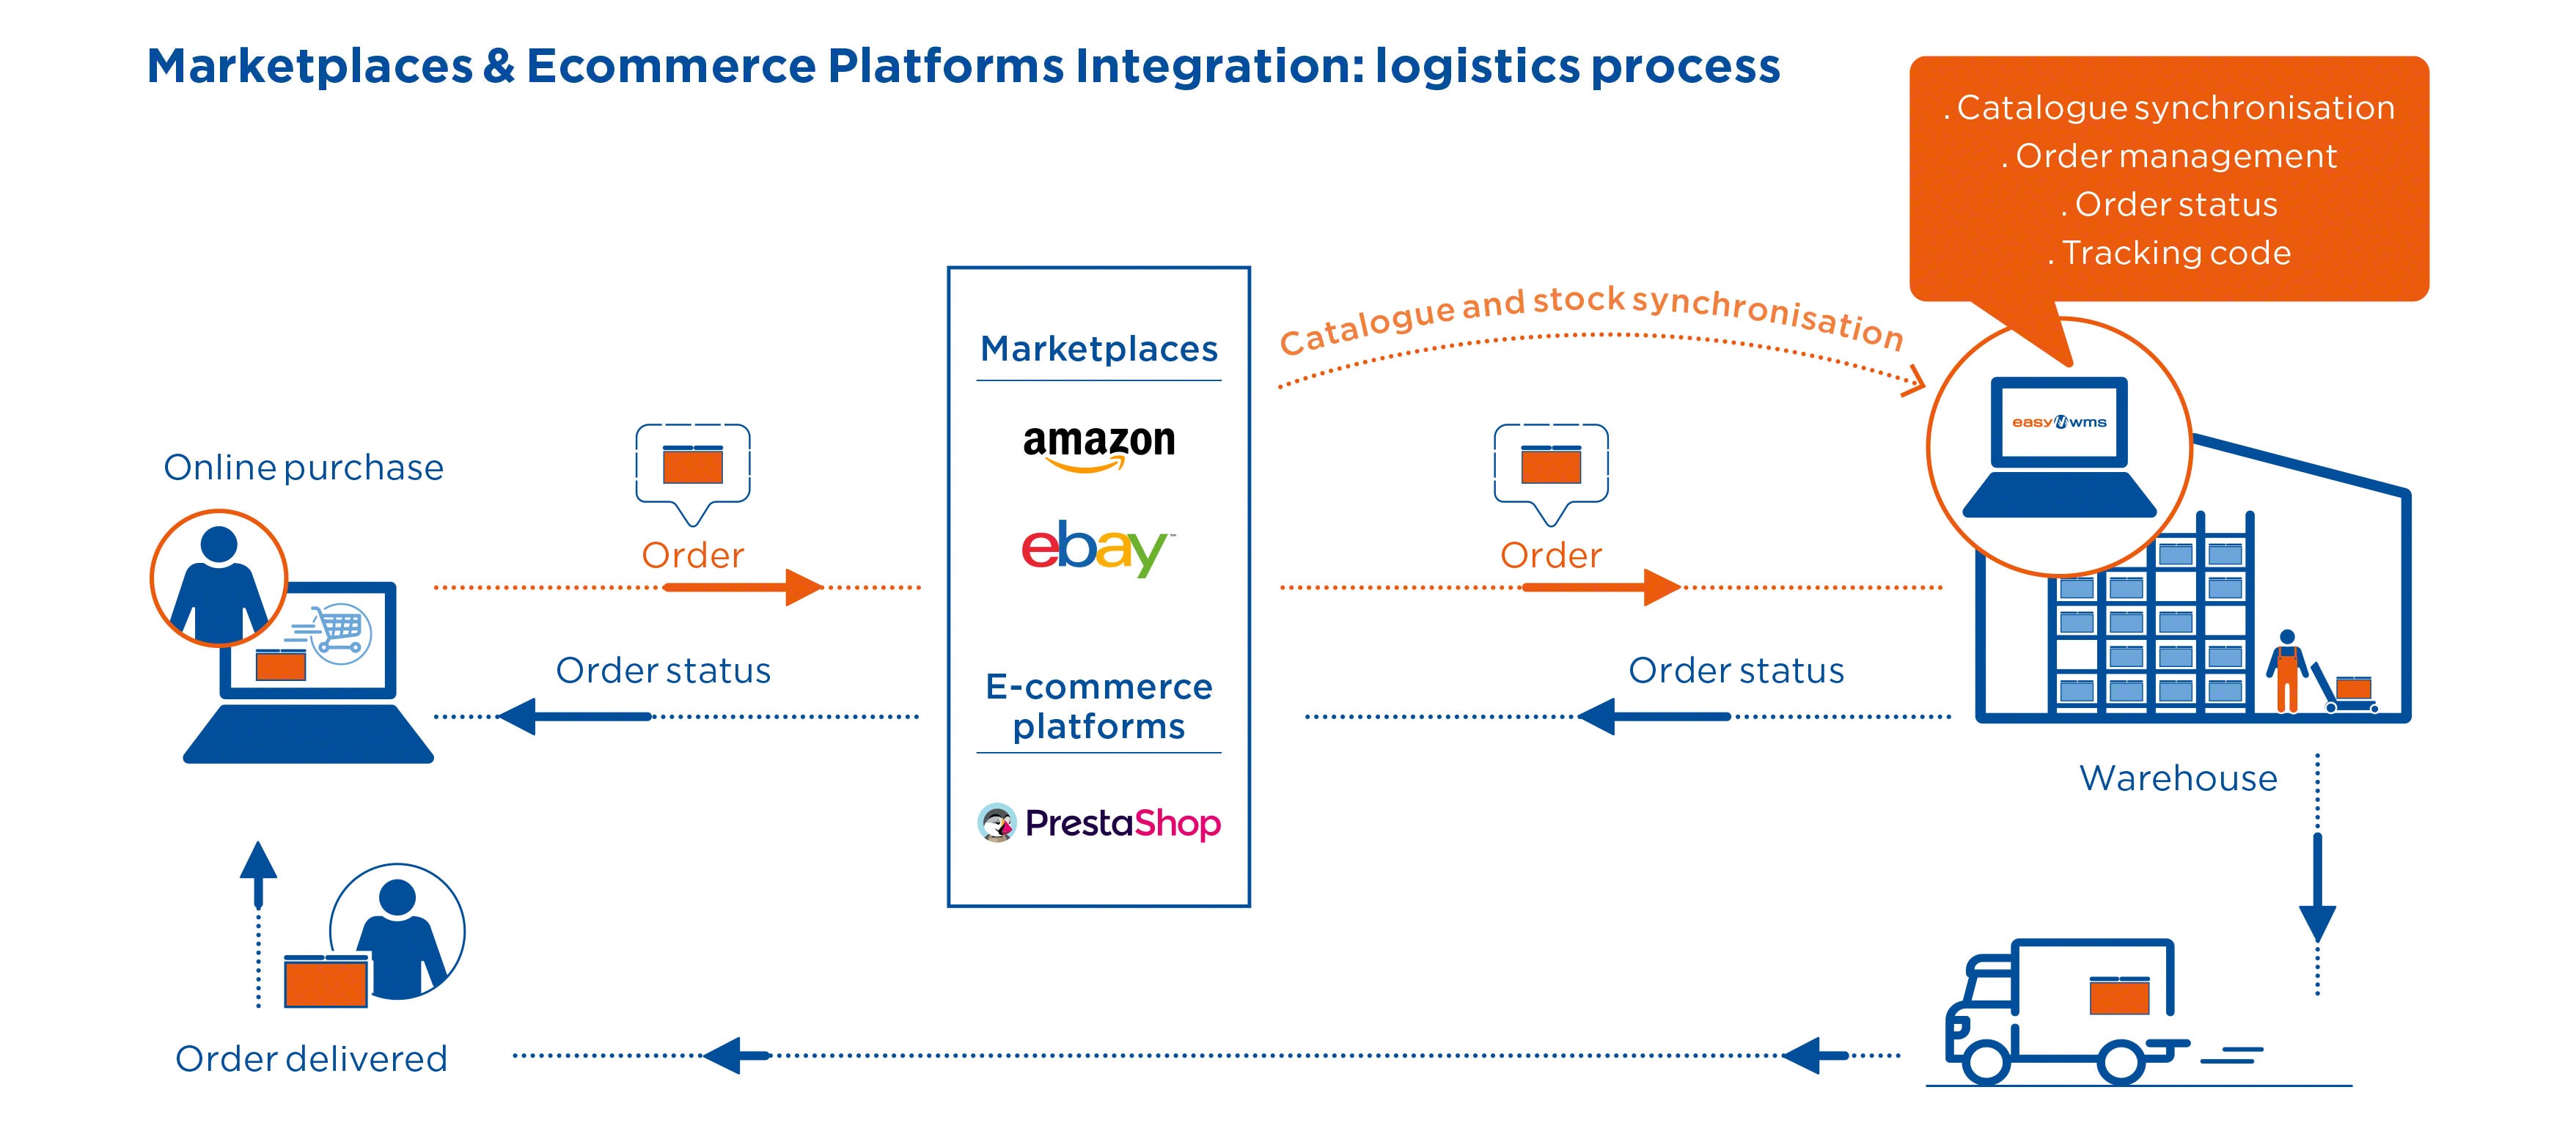 Marketplaces & Ecommerce Platforms Integration